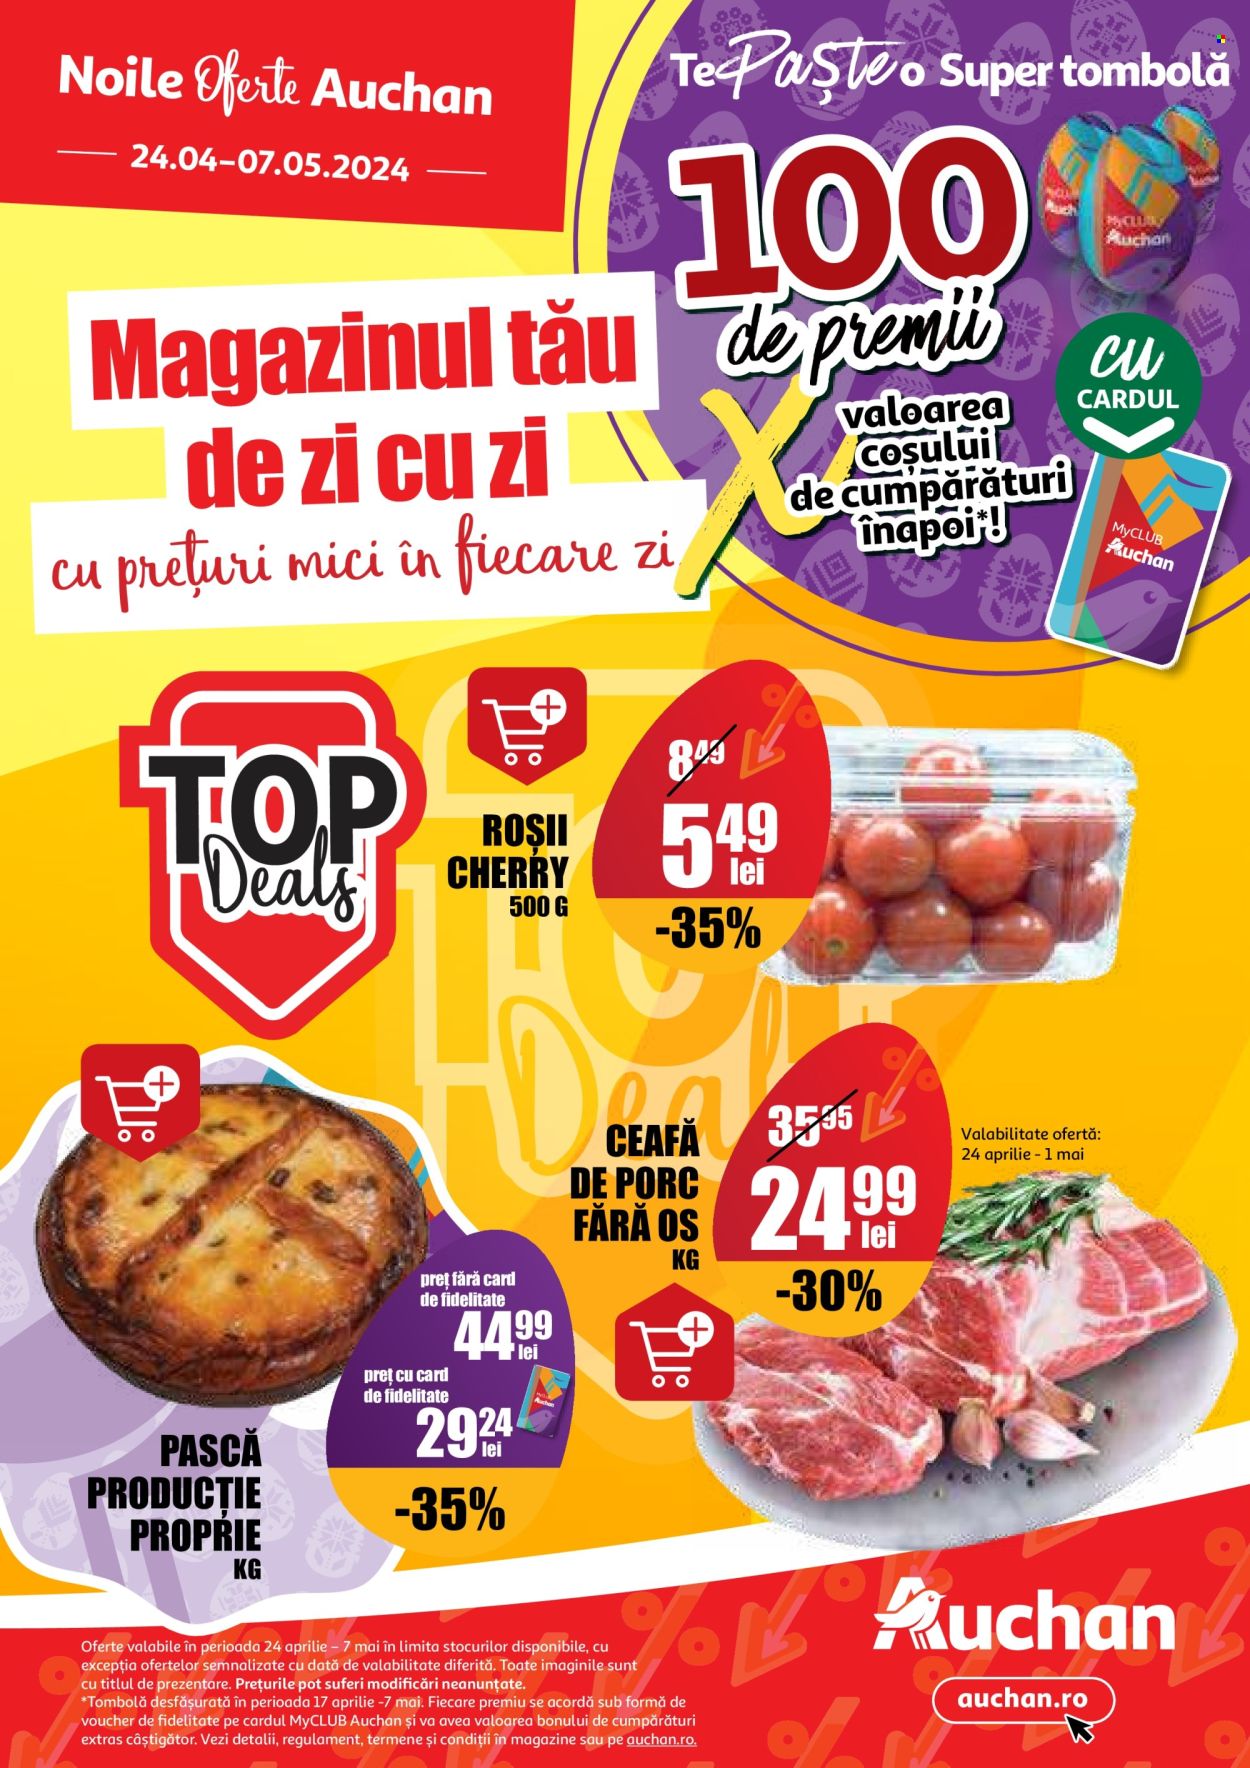 thumbnail - Cataloage Auchan - 24.04.2024 - 07.05.2024 - Produse în vânzare - rosii cherry, roșie, carne de porc, ceafă de porc. Pagina 1.